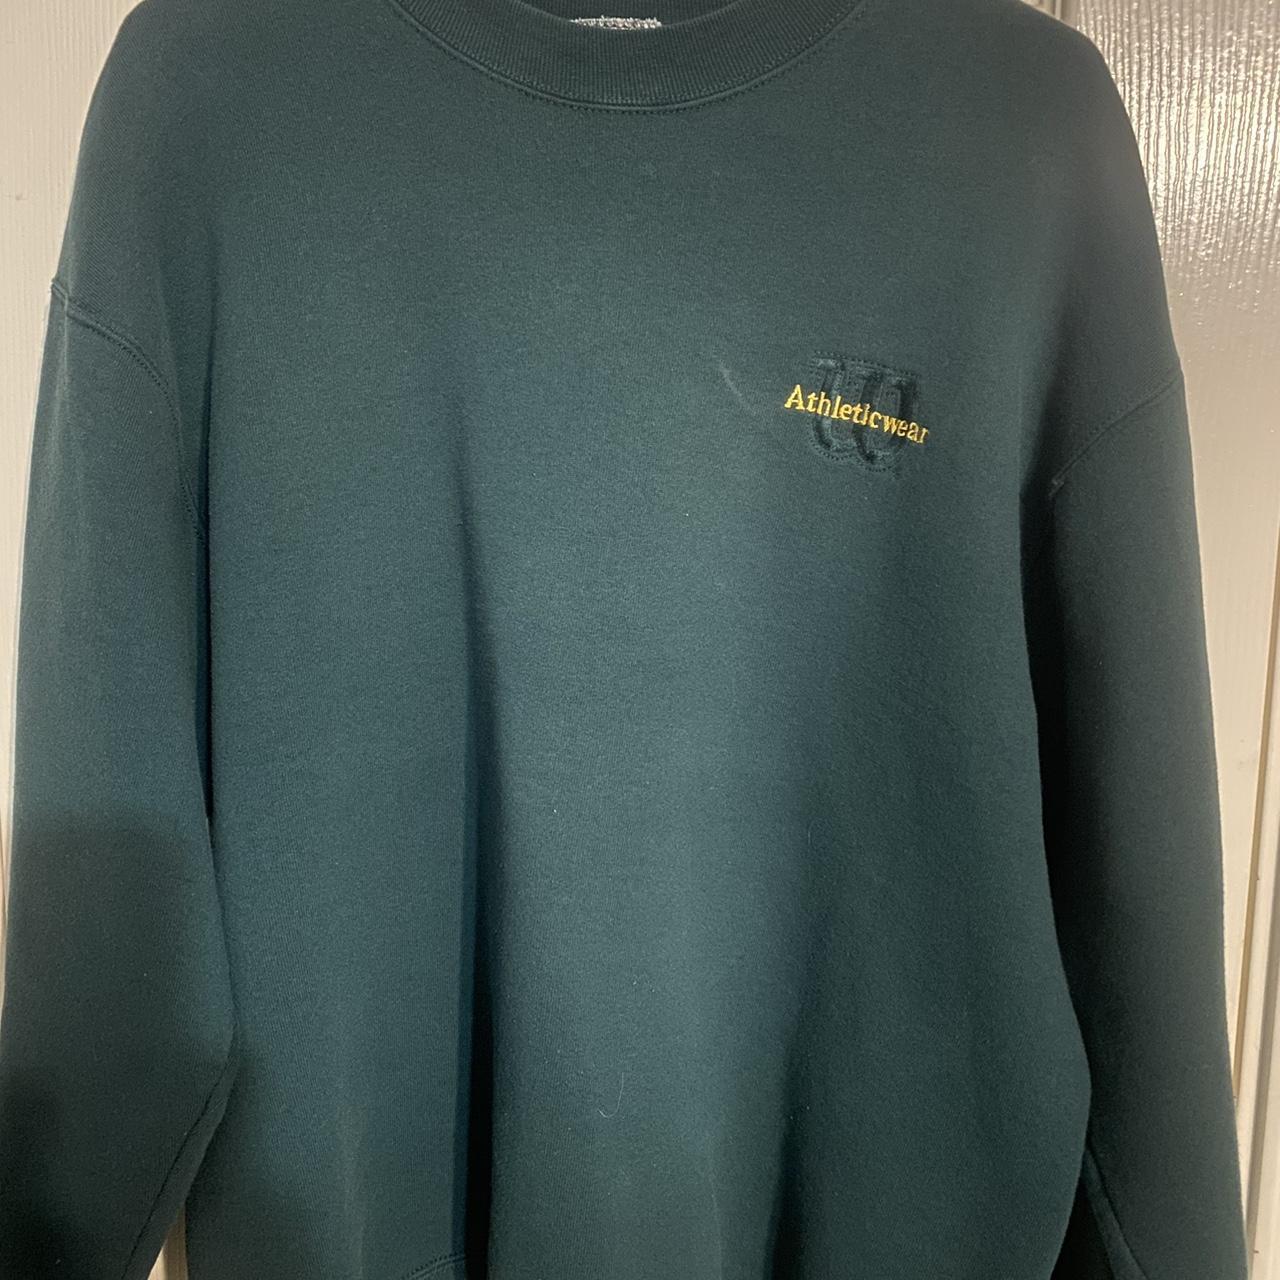 Vintage 1990s Wilson Athletic Wear Crewneck Sweatshirt / 90s